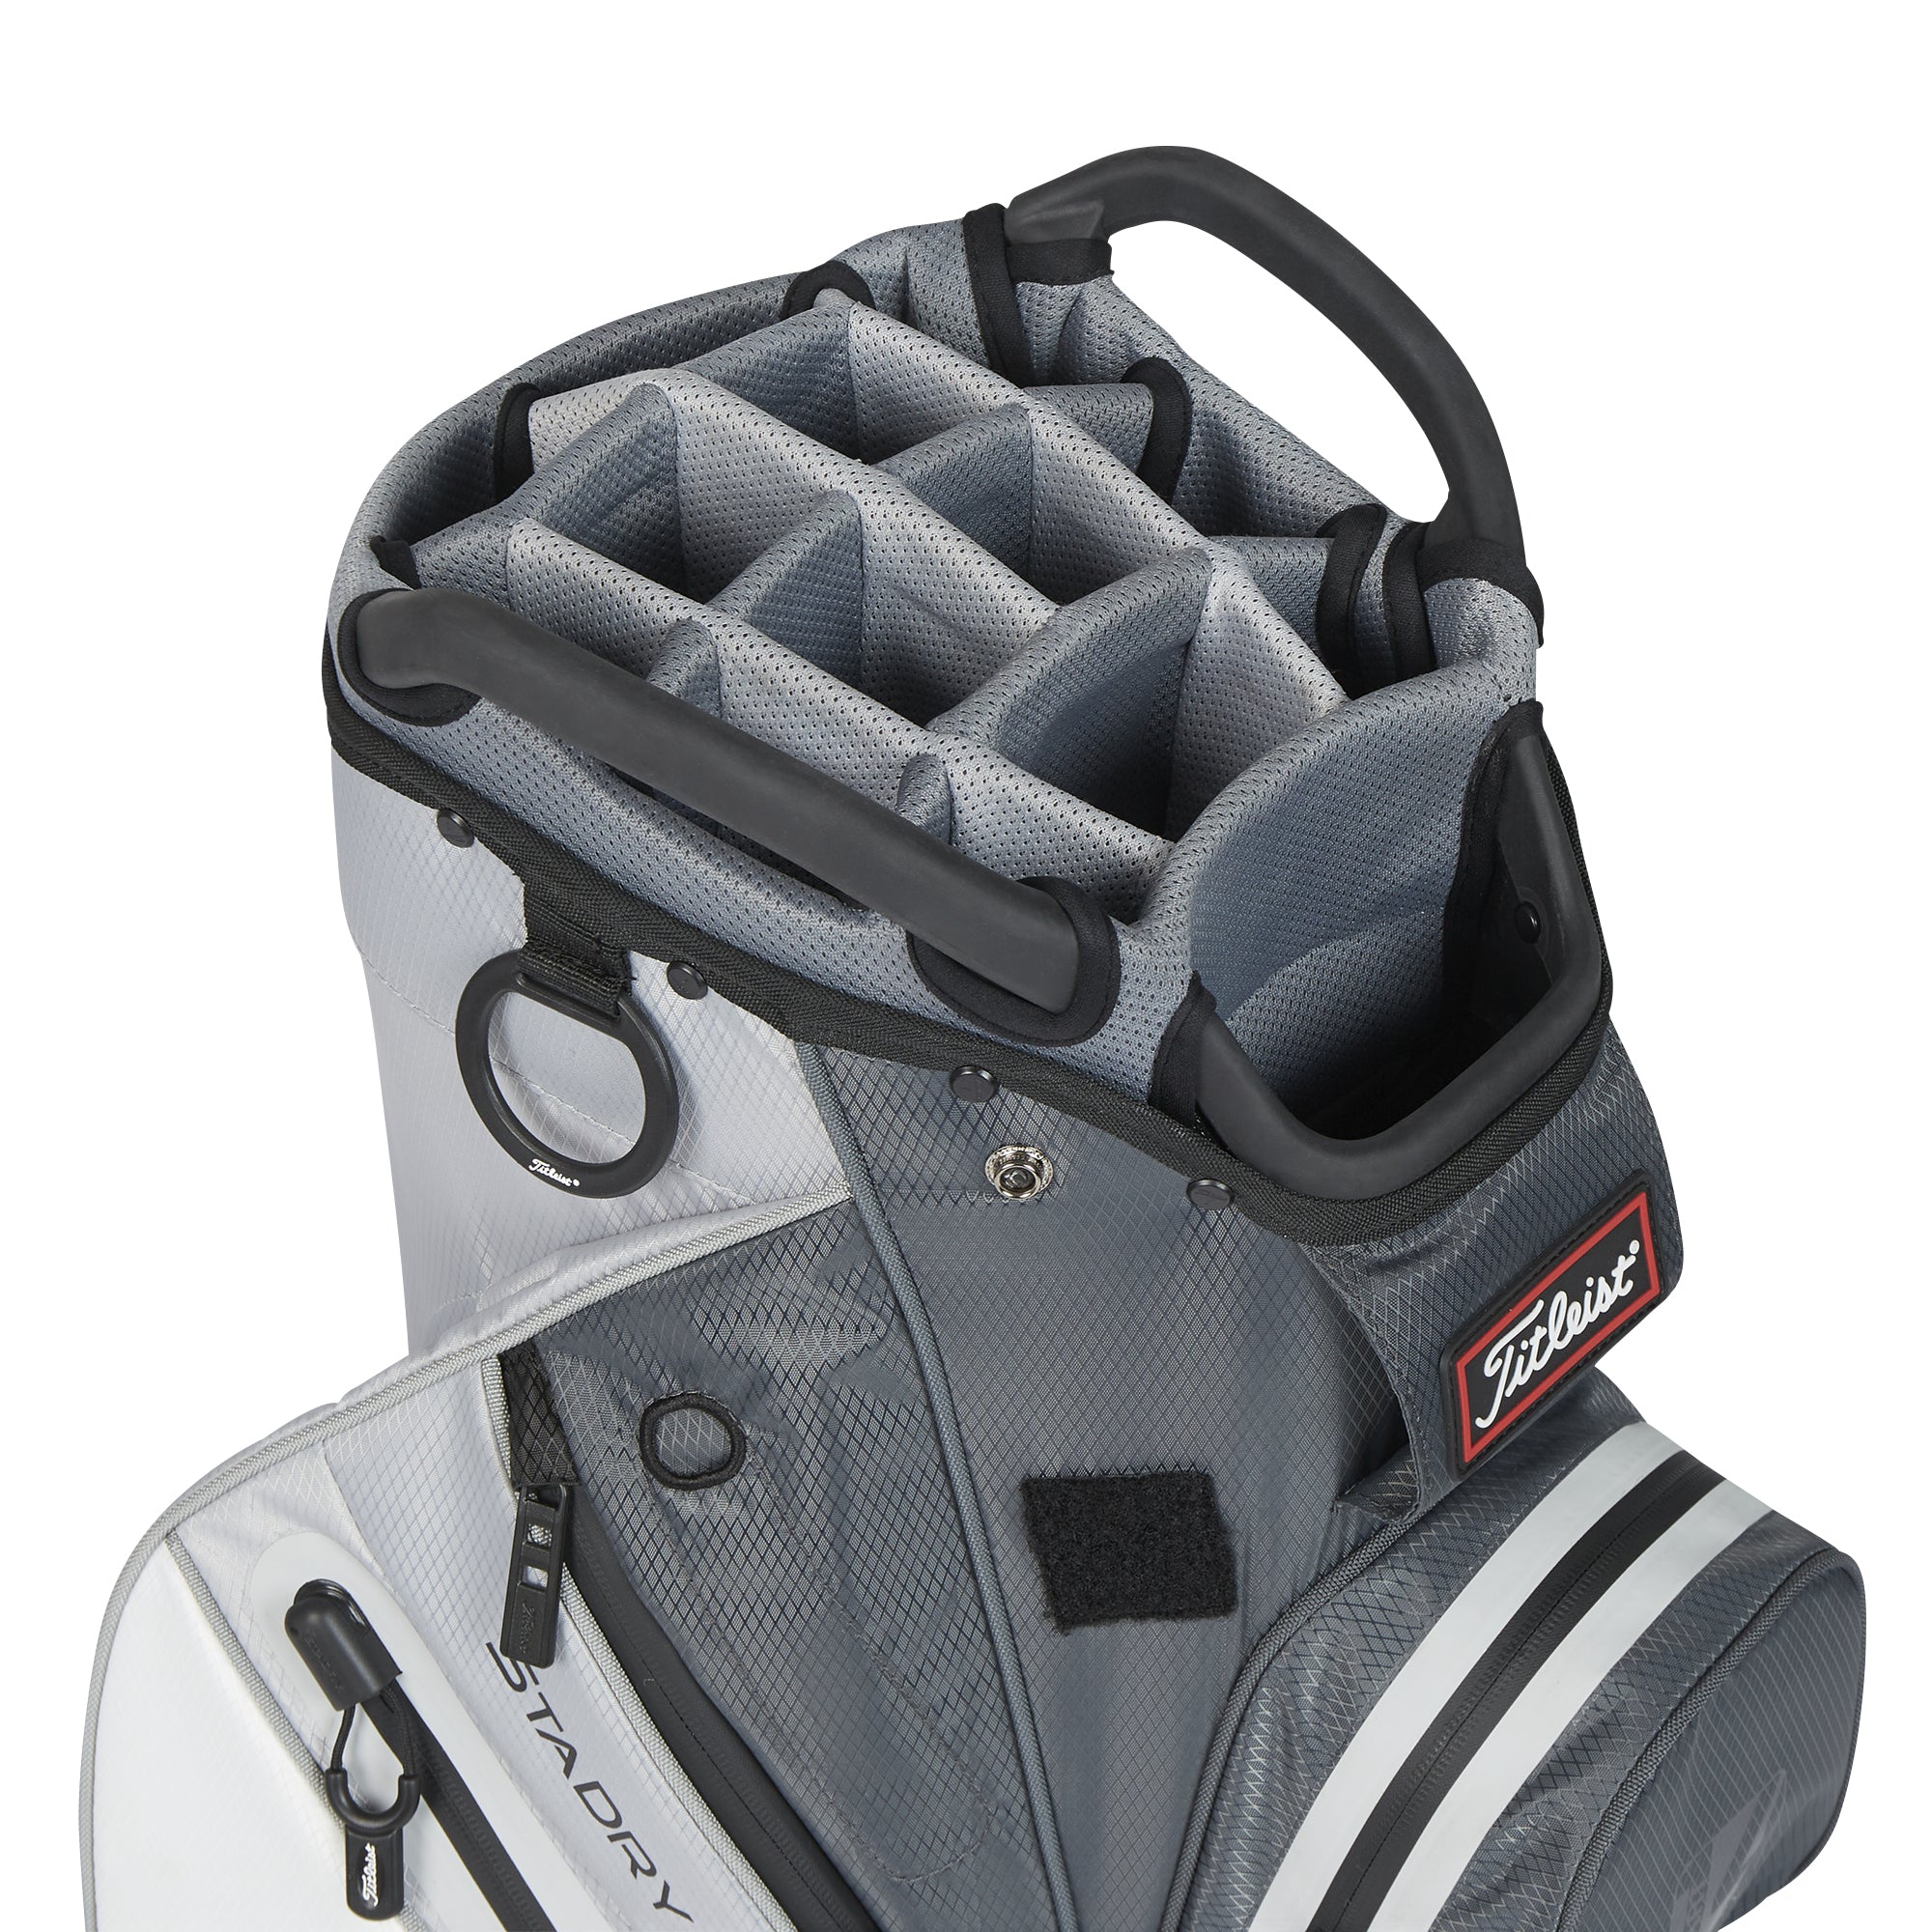 titleist-cart-14-stadry-golf-bag-tb23ct9-221-charcoal-grey-white